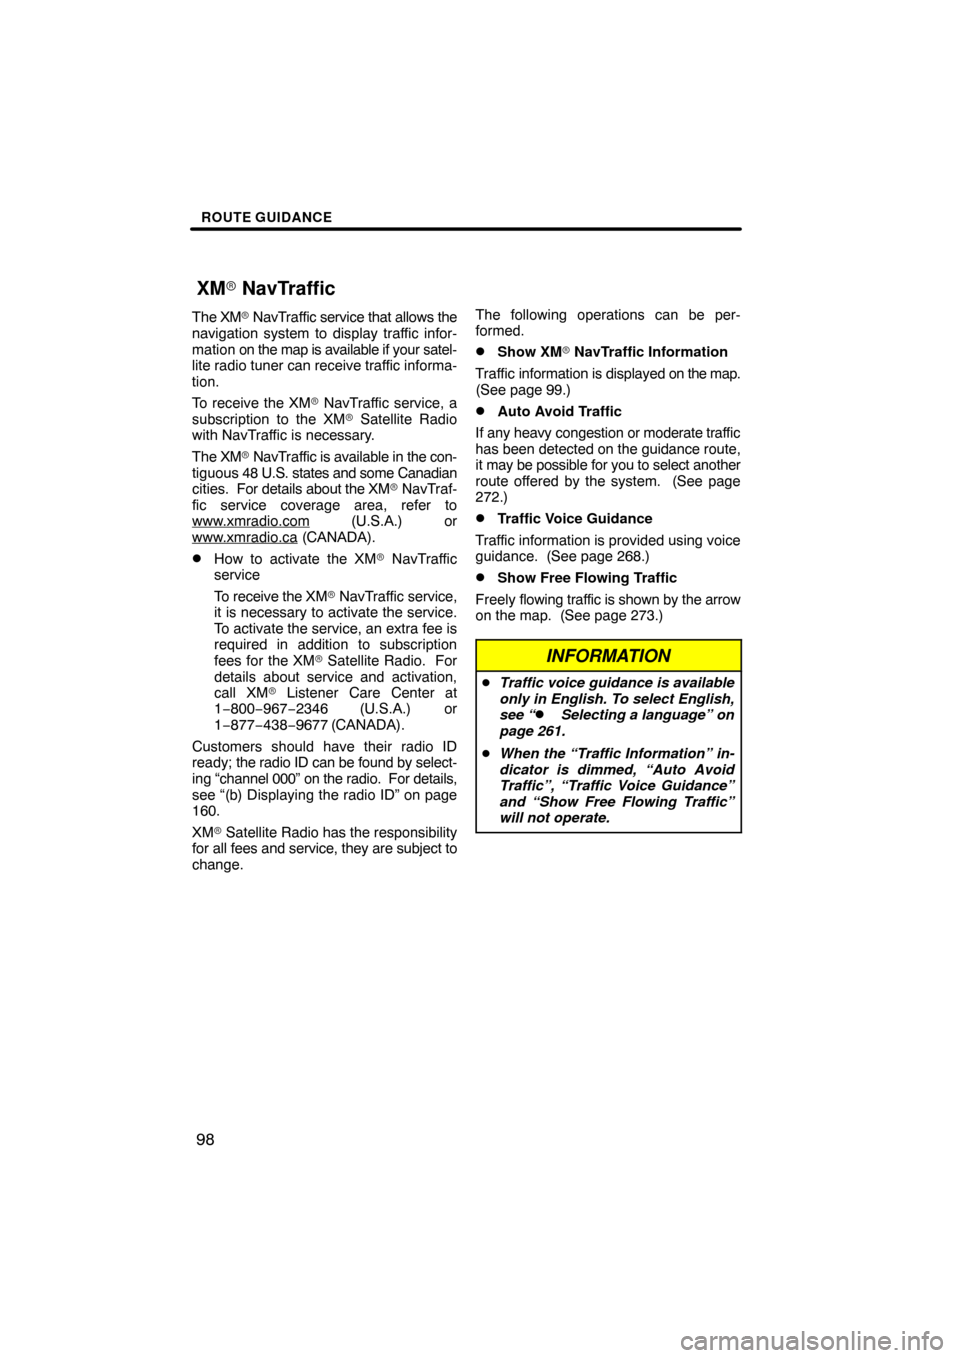 TOYOTA HIGHLANDER 2013 XU50 / 3.G Navigation Manual ROUTE GUIDANCE
98
The XM NavTraffic service that allows the
navigation system to display traffic infor-
mation on the map is available if your satel-
lite radio tuner can receive traffic informa-
tio